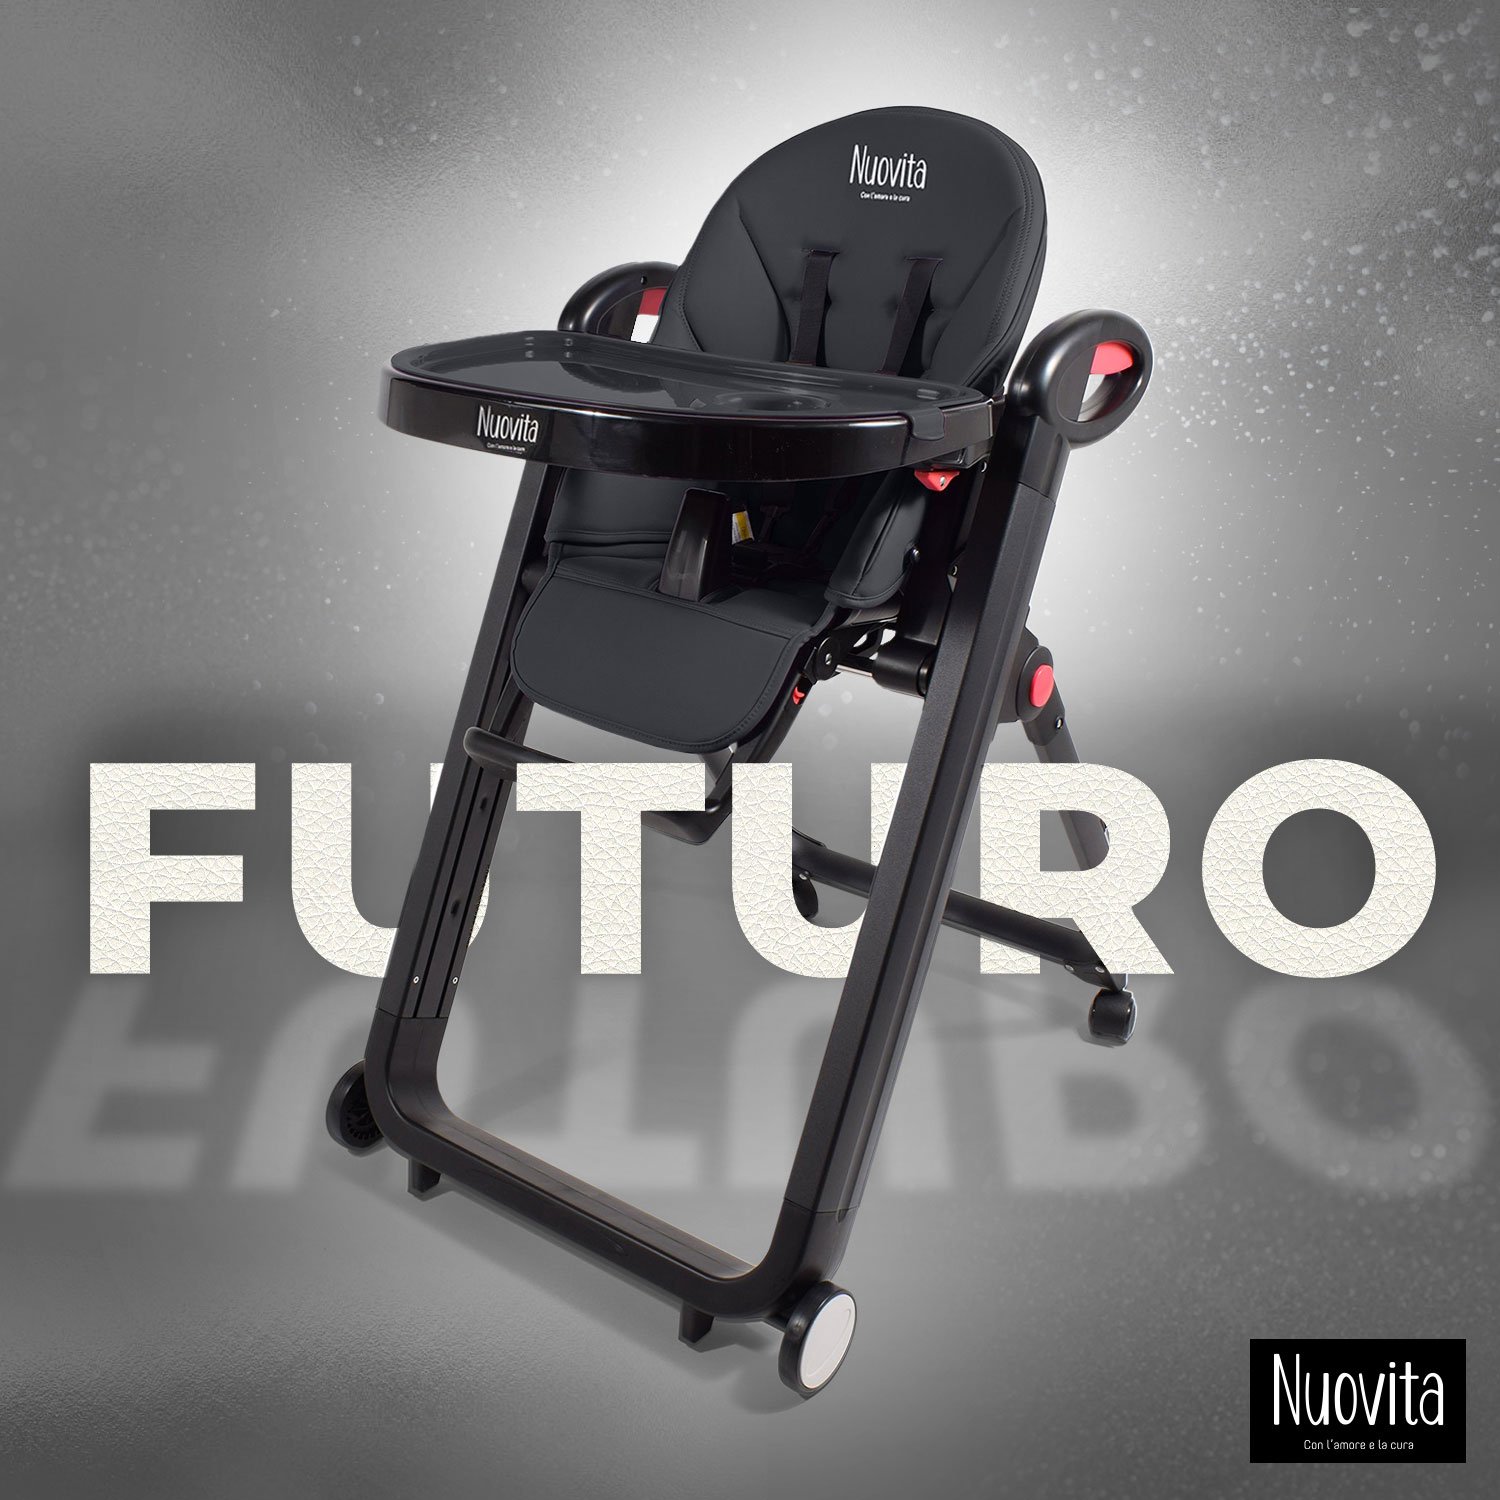 Стульчик для кормления Nuovita Futuro Nero (Nero / Черный) стульчик для кормления nuovita futuro senso nero arancione оранжевый